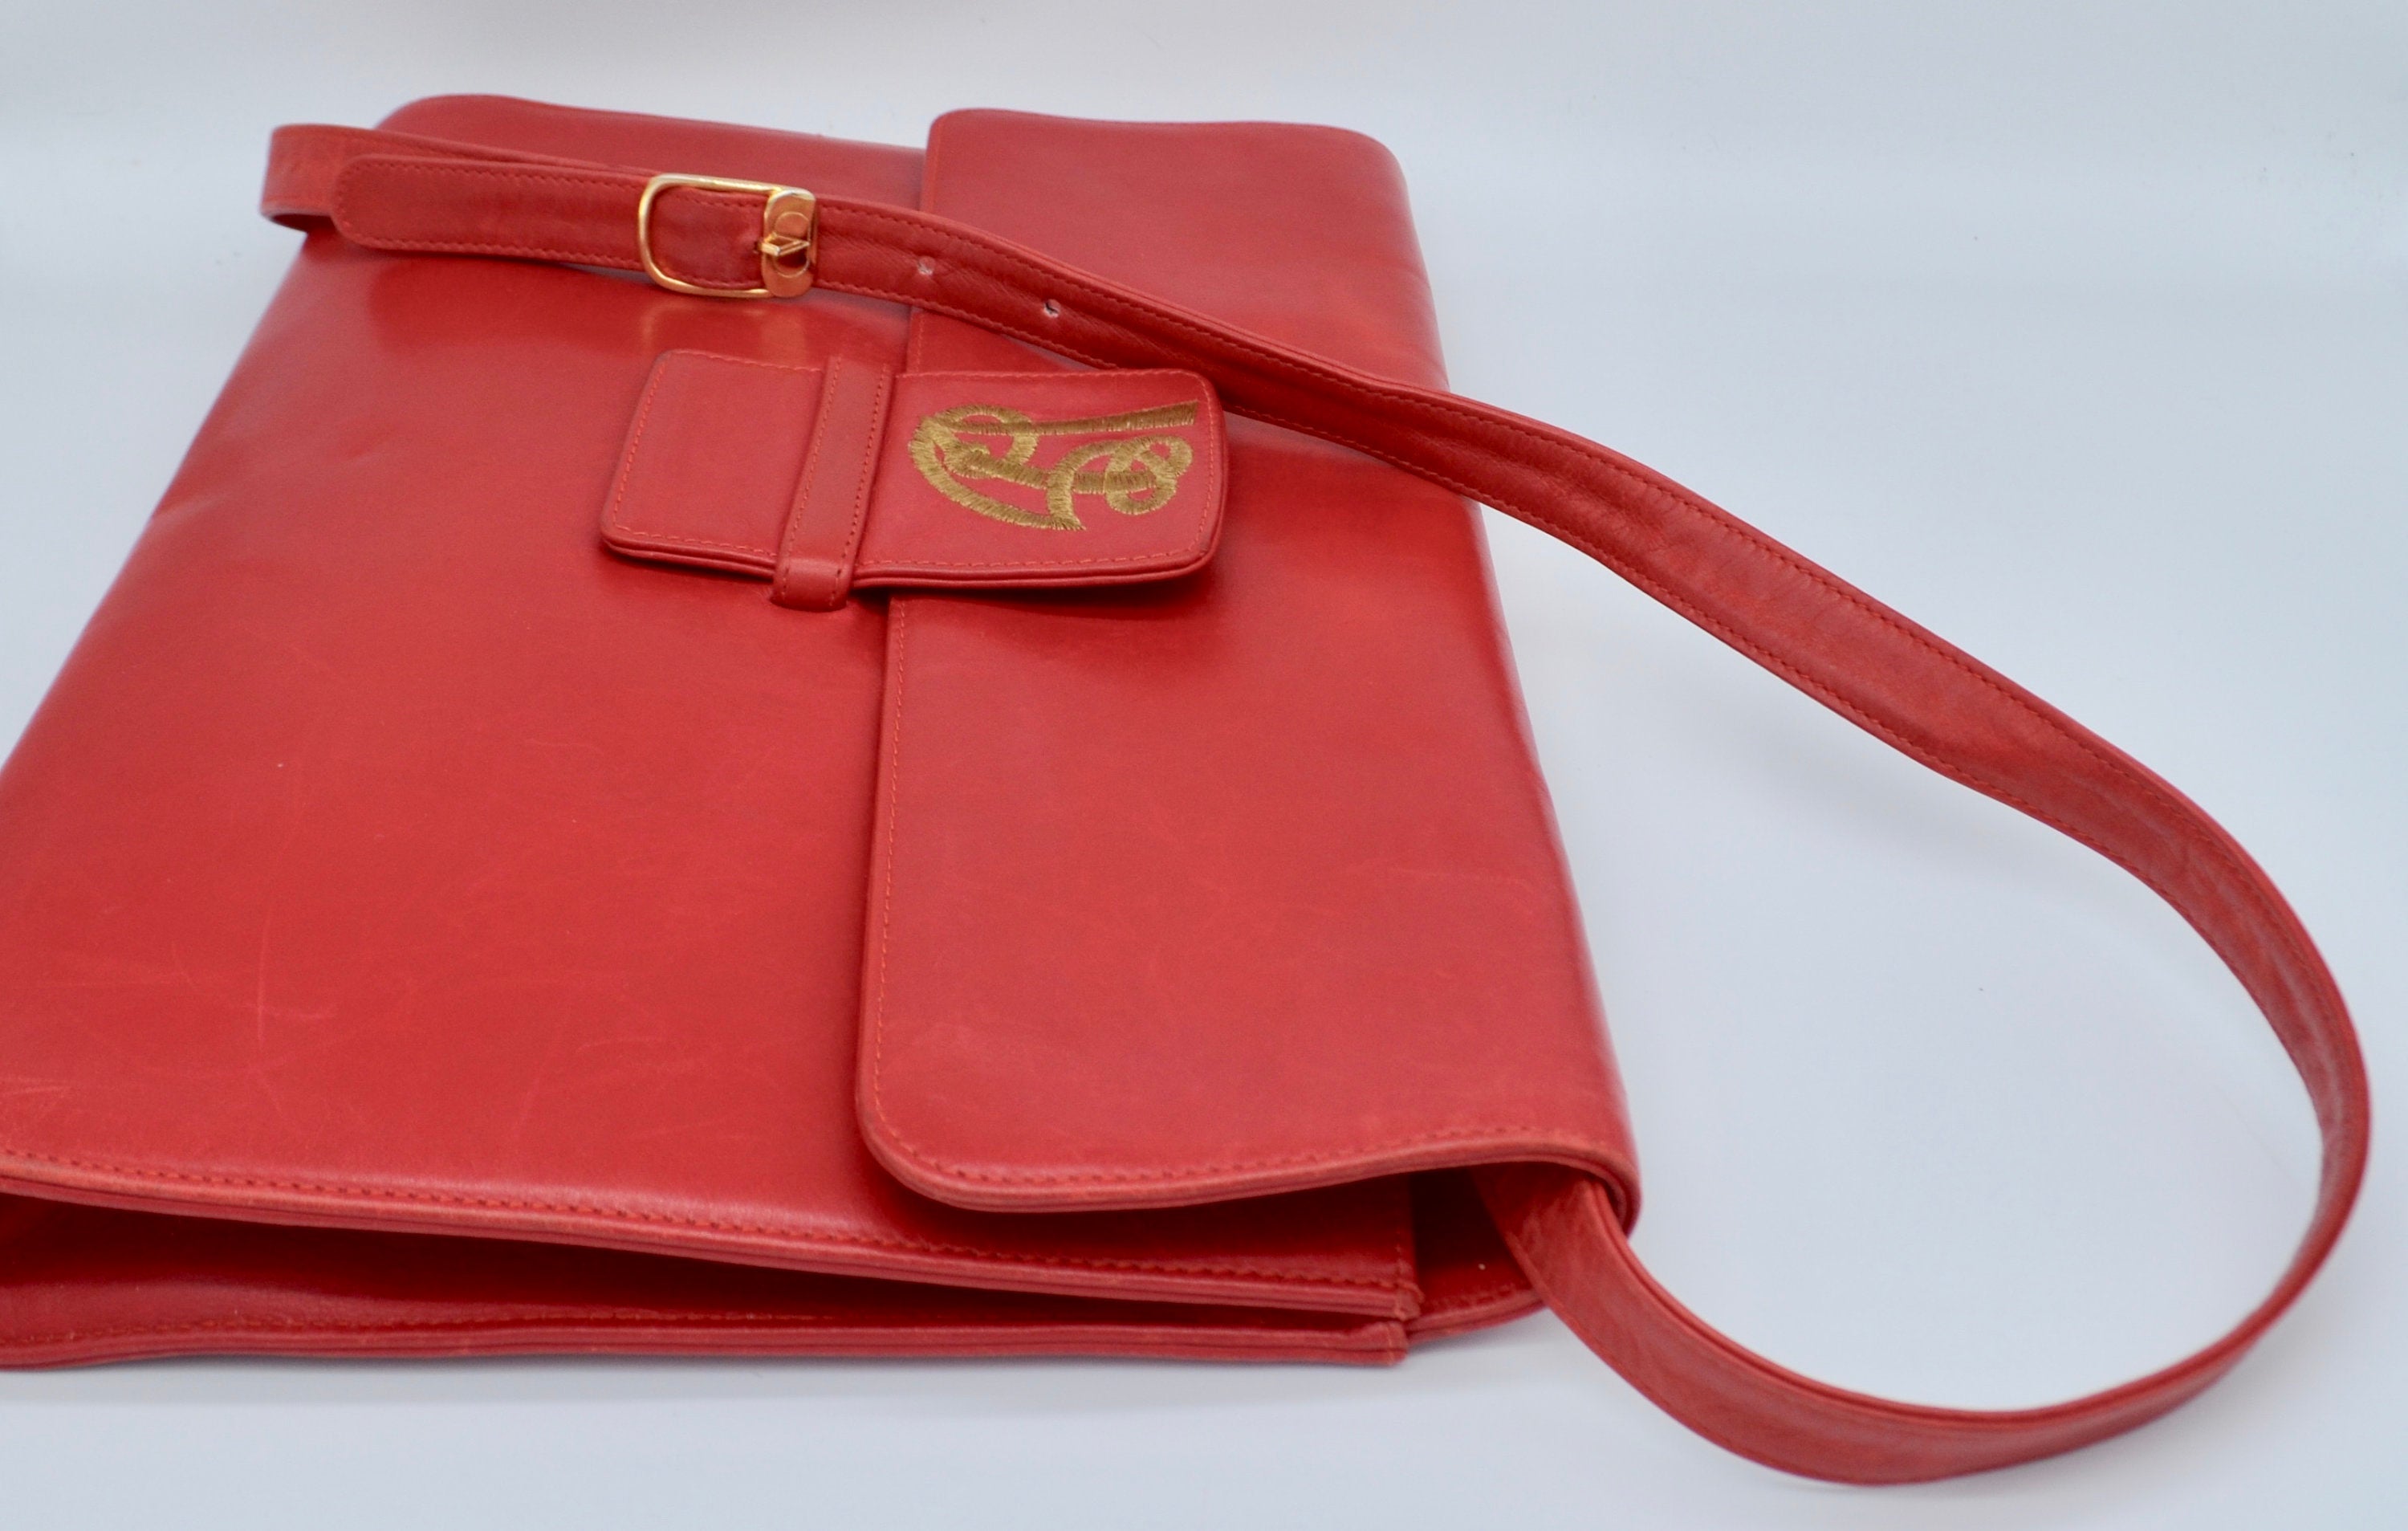 1990S Valentino Garavani Genuine Red Vibrant Leather Oversized Clutch Envelope Shoulderbag Vg